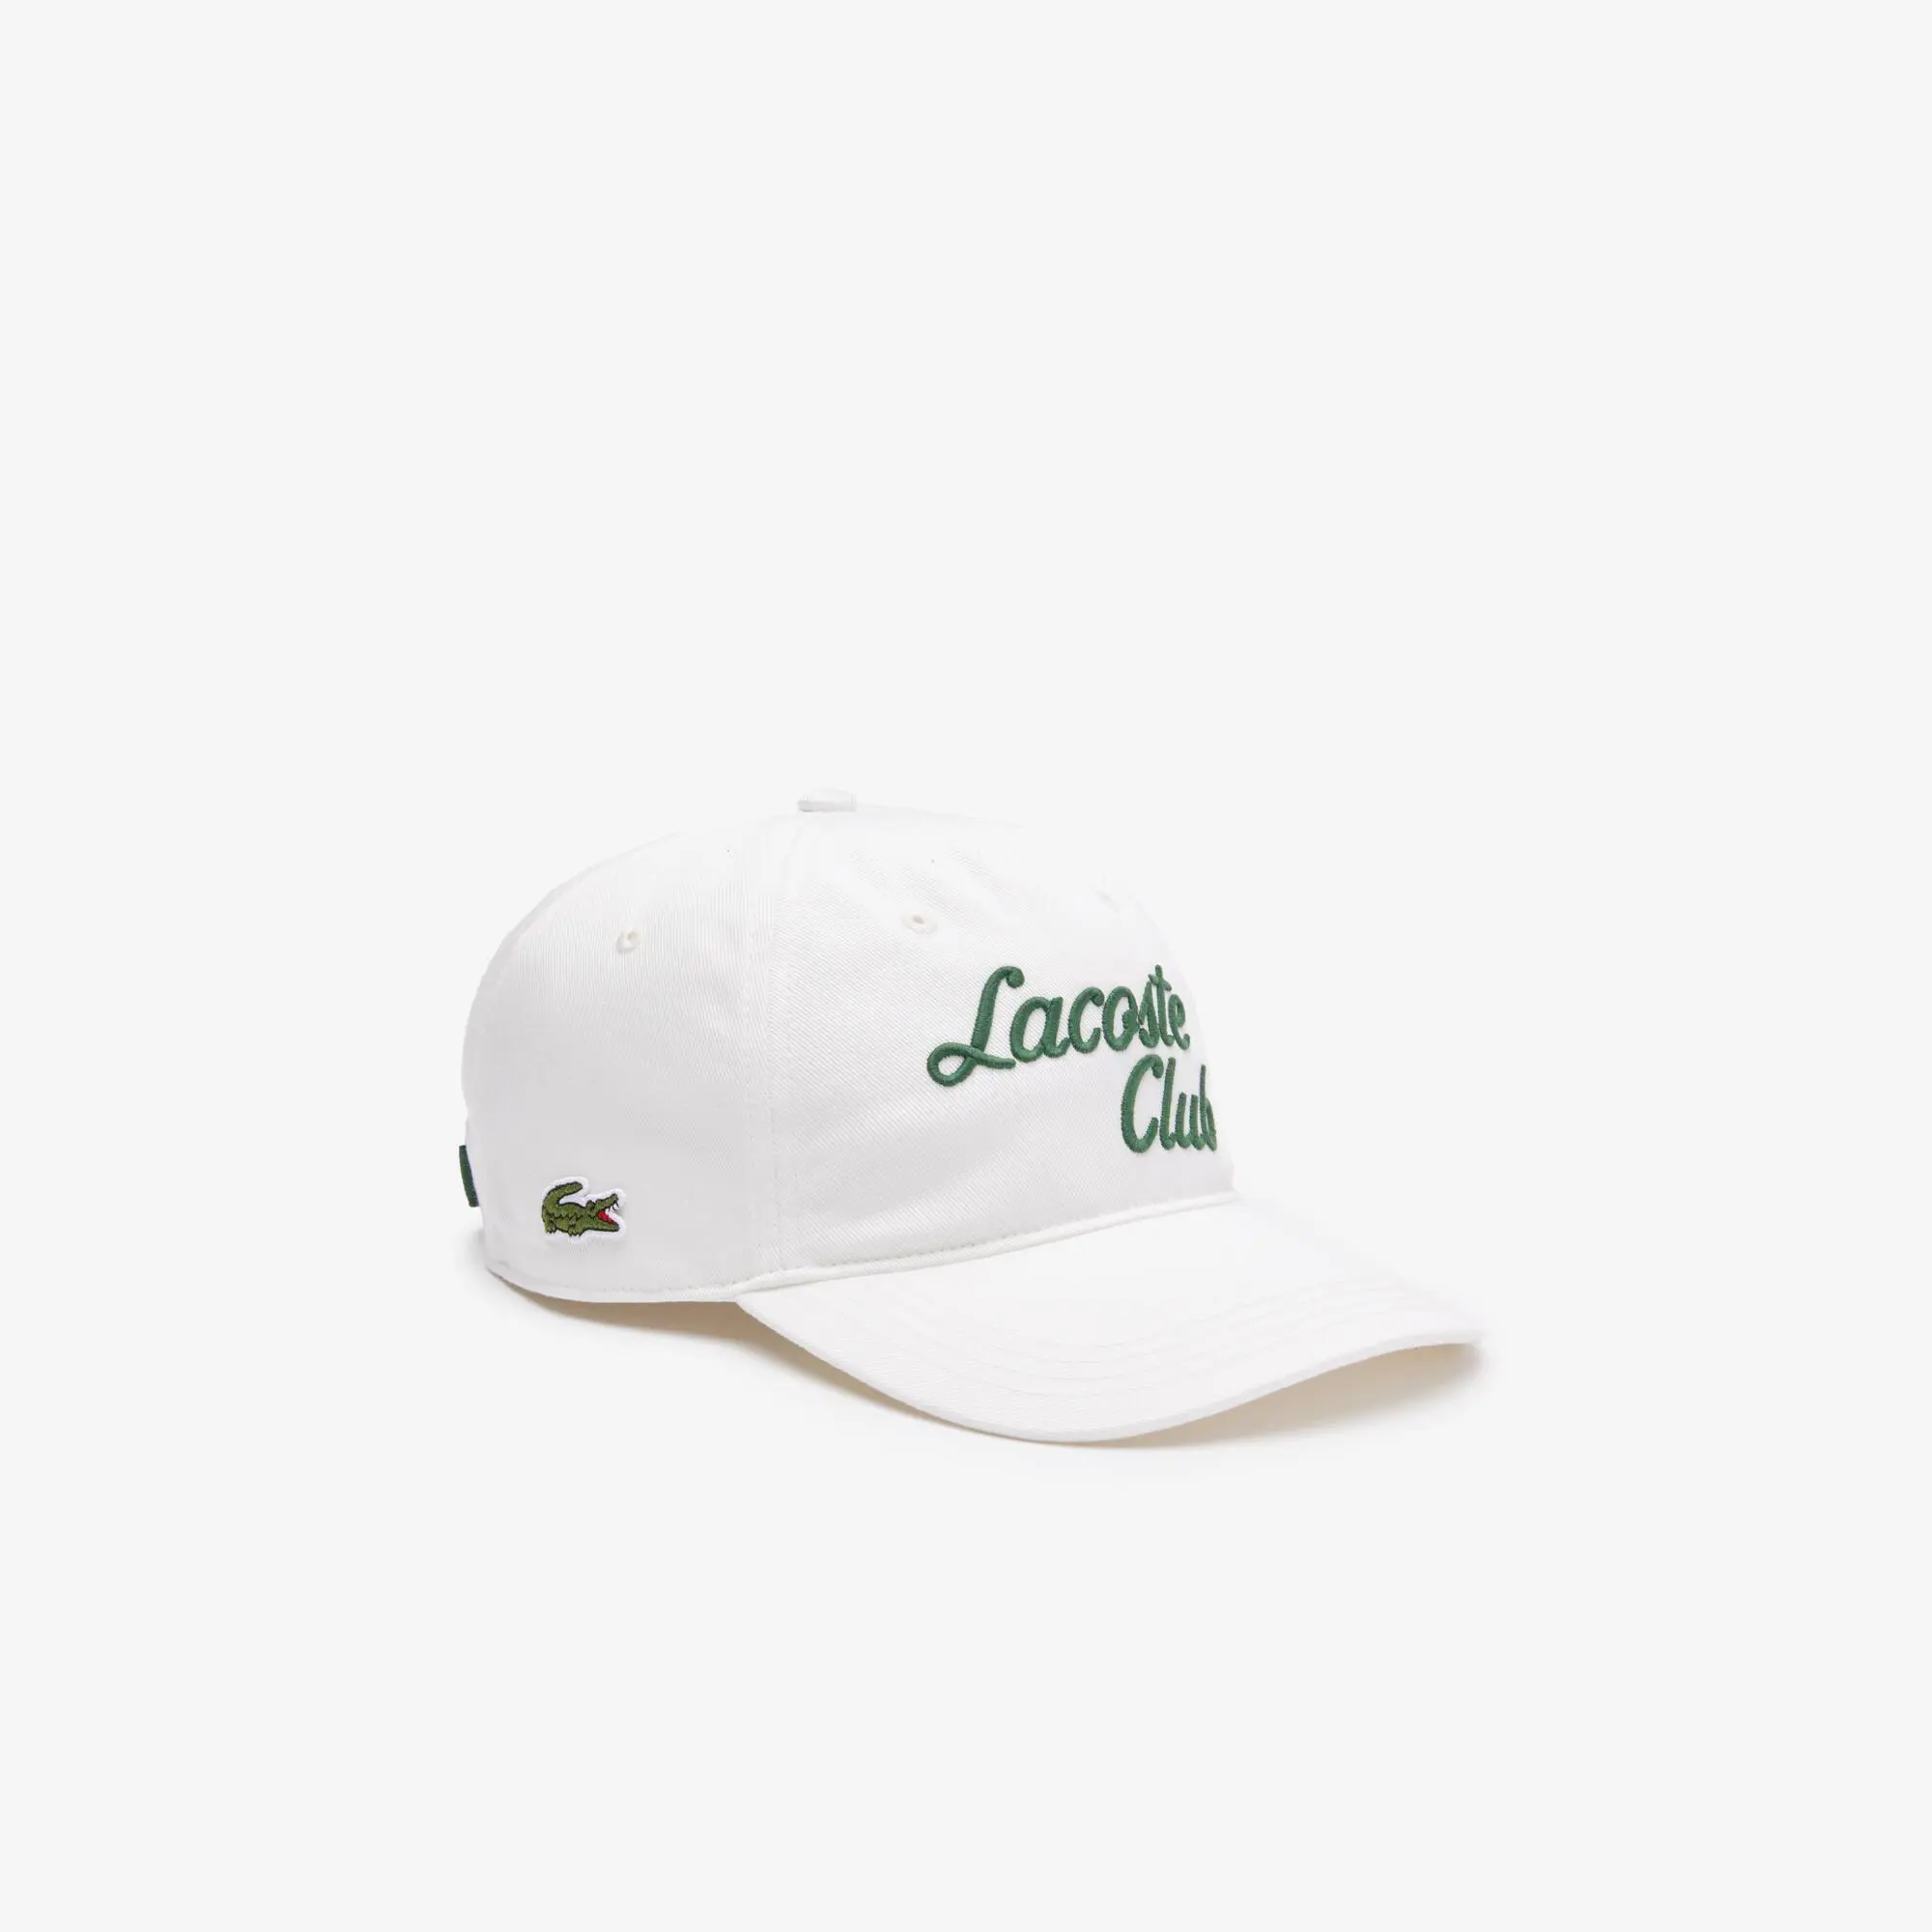 Lacoste Men’s Lacoste Sport Roland Garros Edition Twill Cap. 2